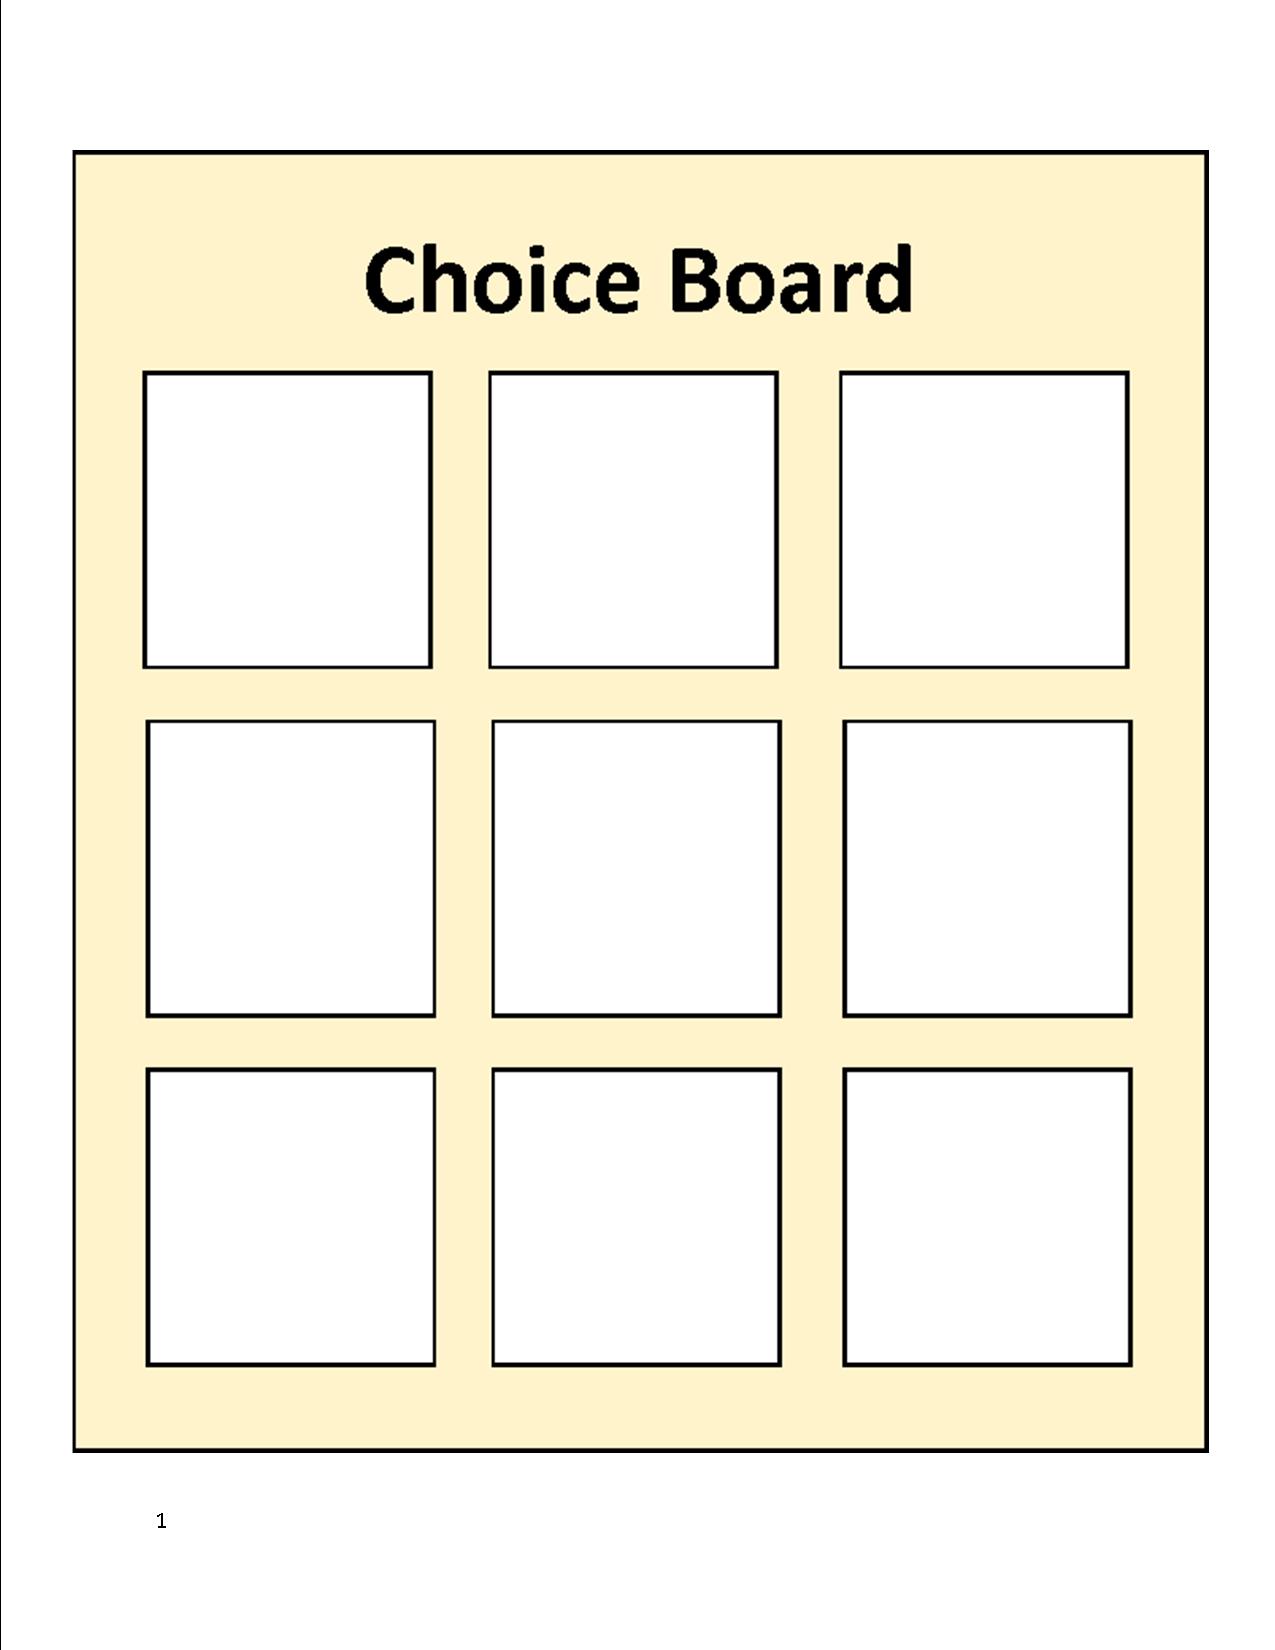 Choice Board Geneva Centre For Autism